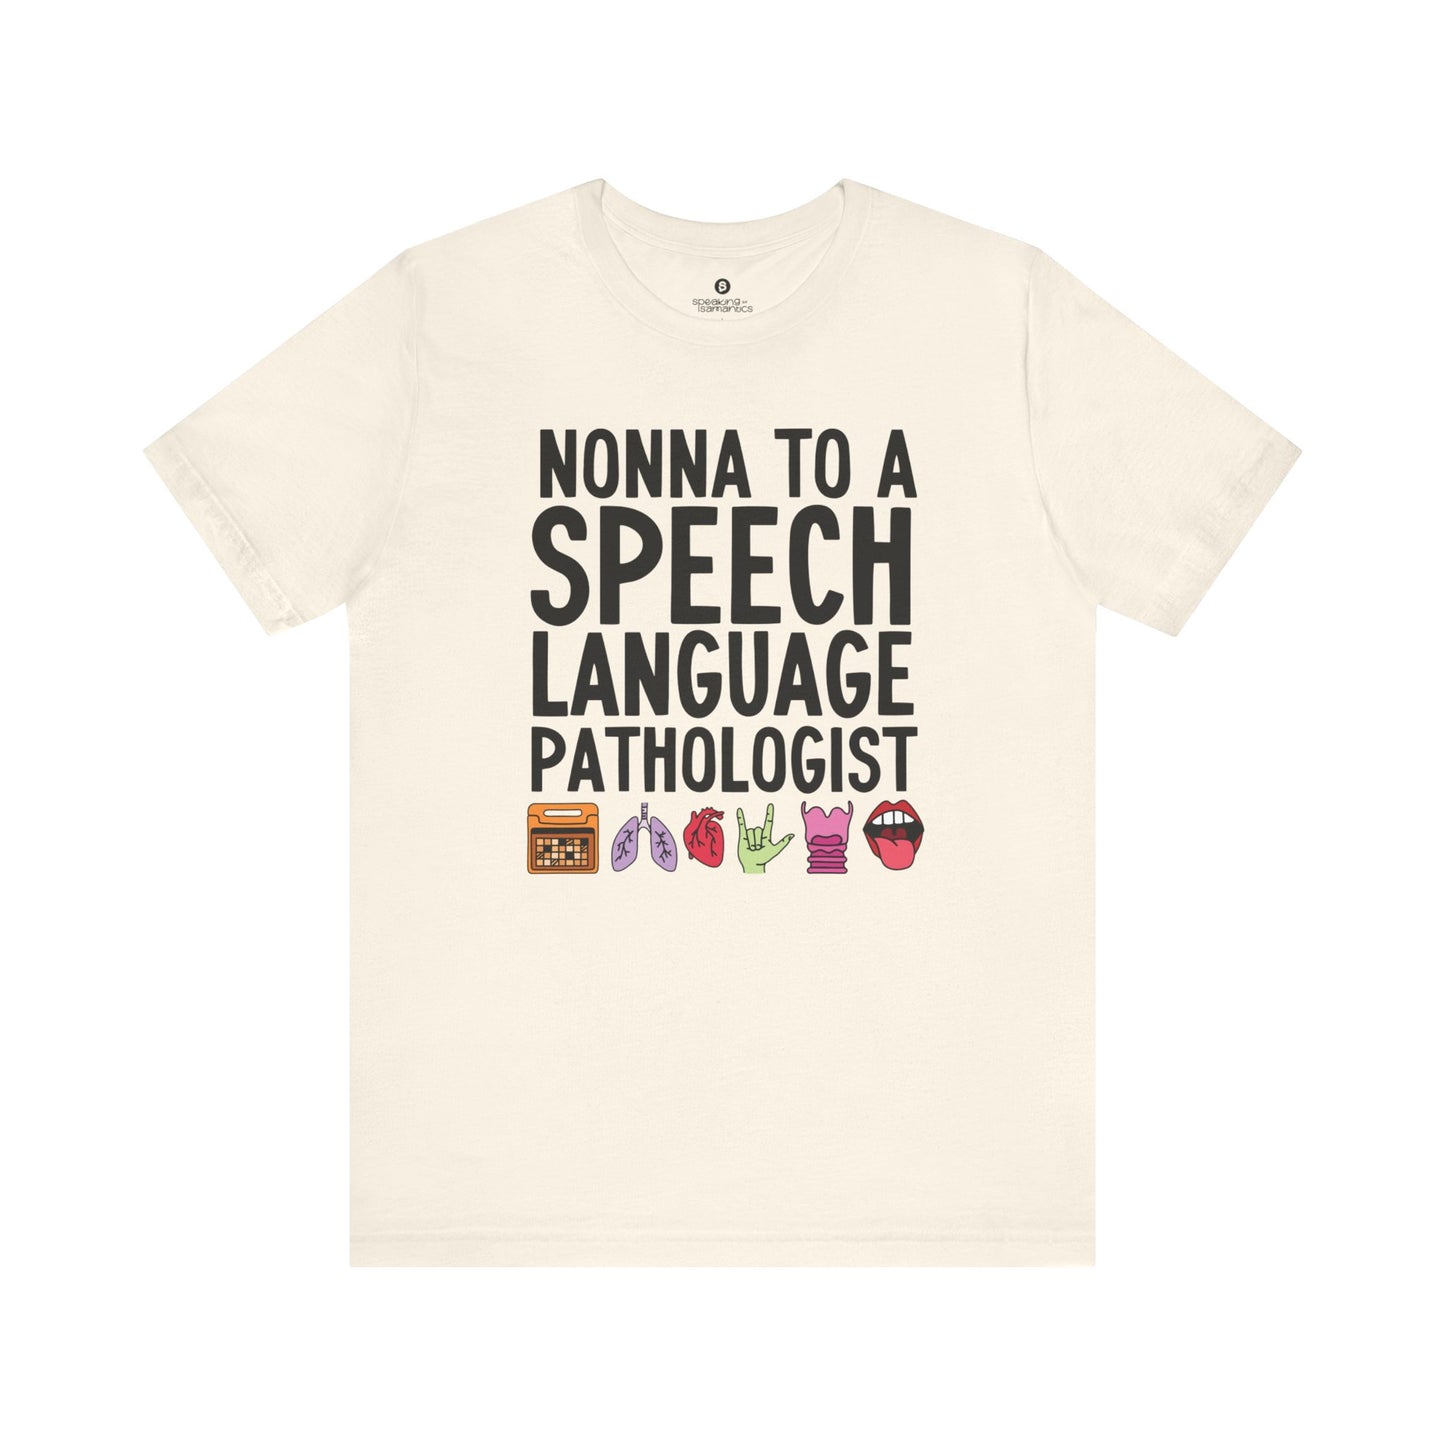 Nonna to a Speech Language Pathologist (SLP) Tee